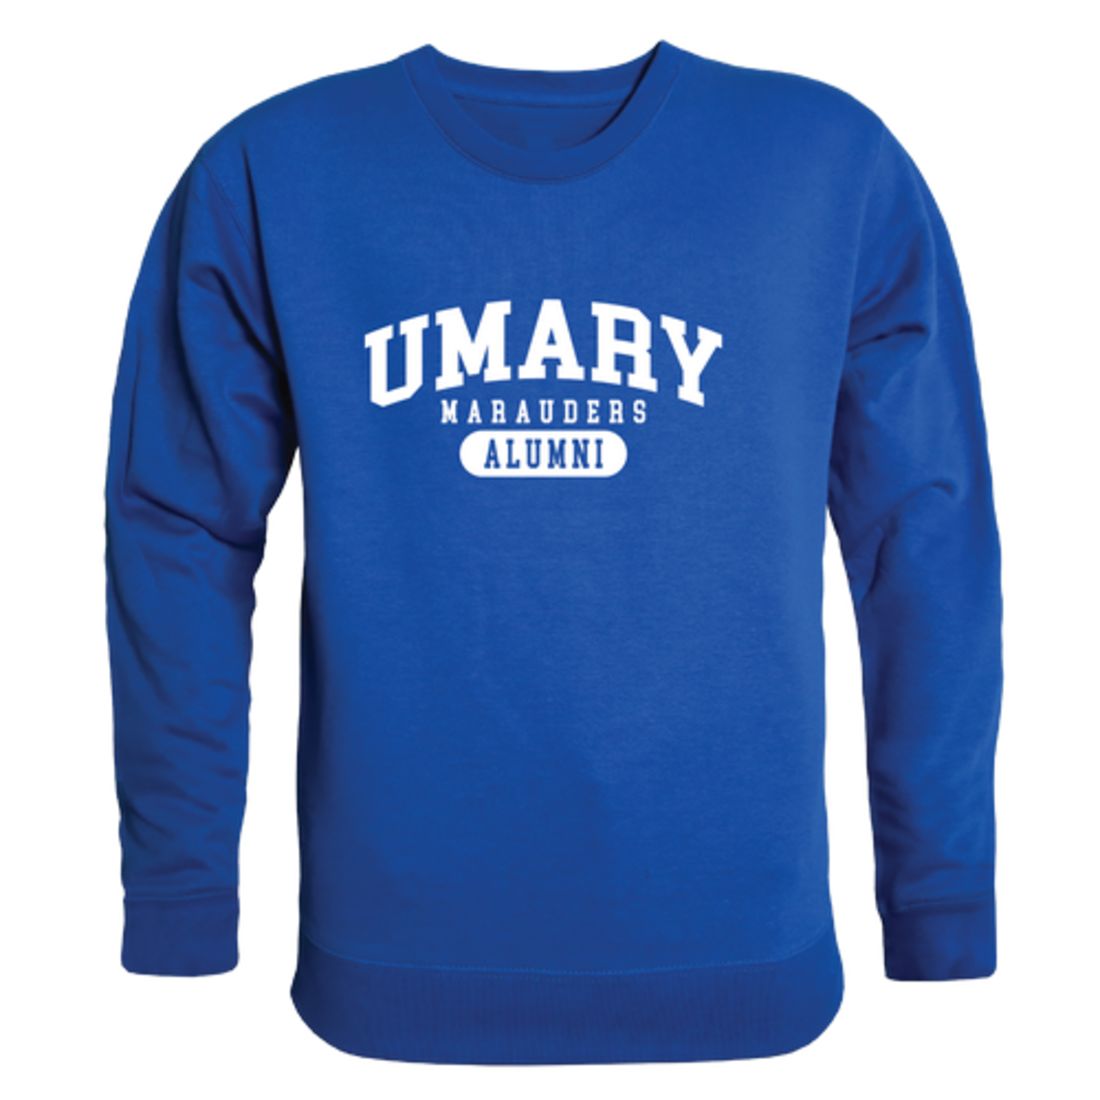 University of Mary Marauders Alumni Crewneck Sweatshirt